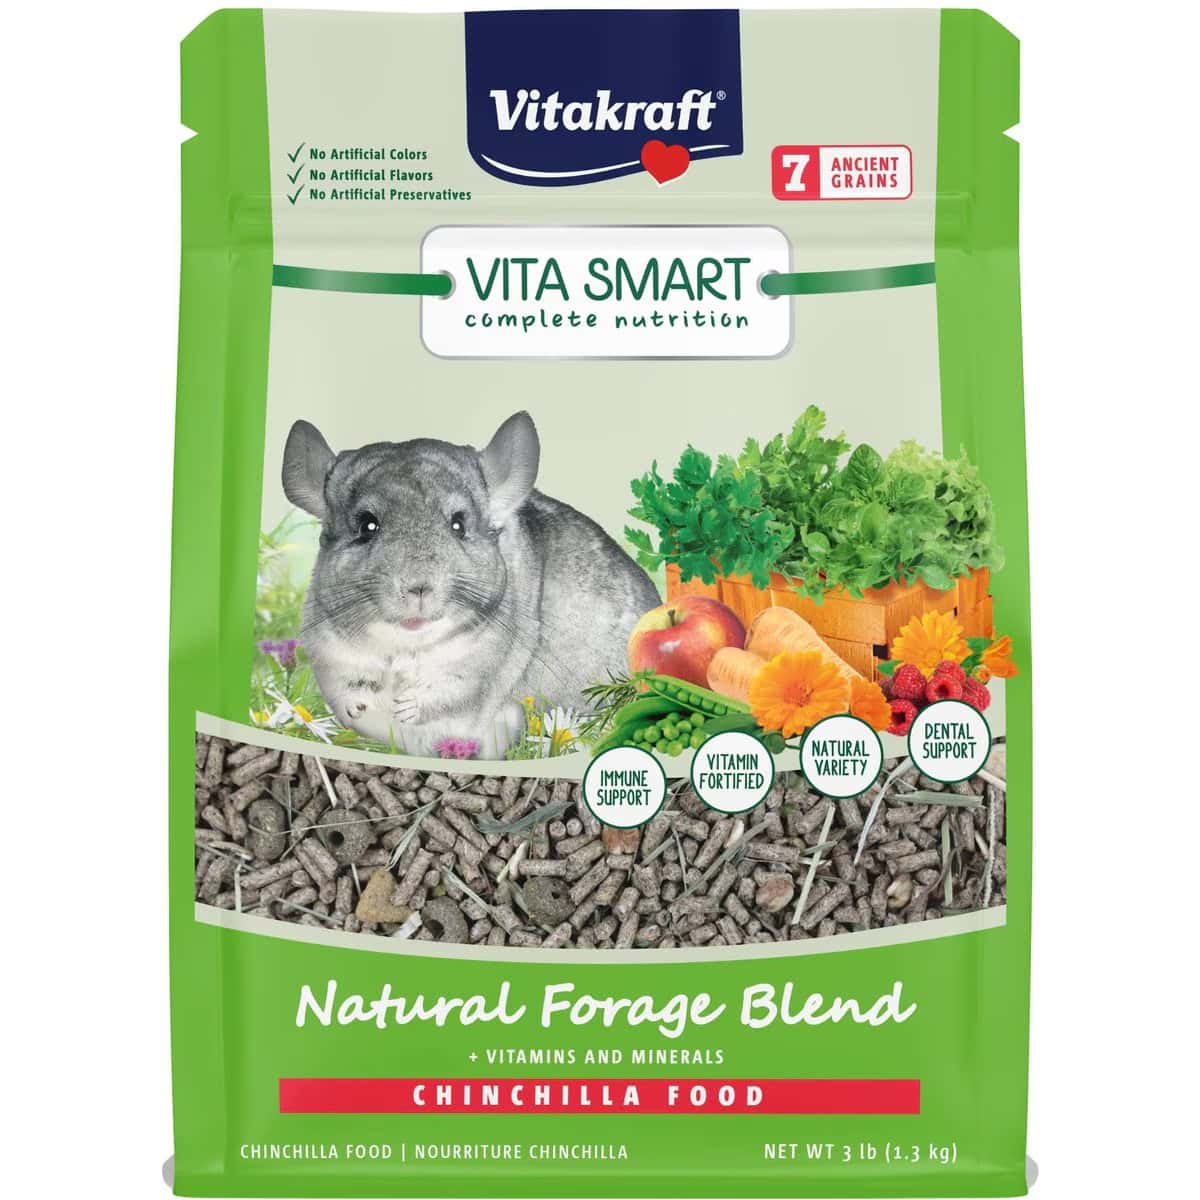 Vitakraft Vita Smart Vitamin-Fortified Complete Natural Forage Blend Nutrition Timothy Hay Pellets Chinchilla Food 